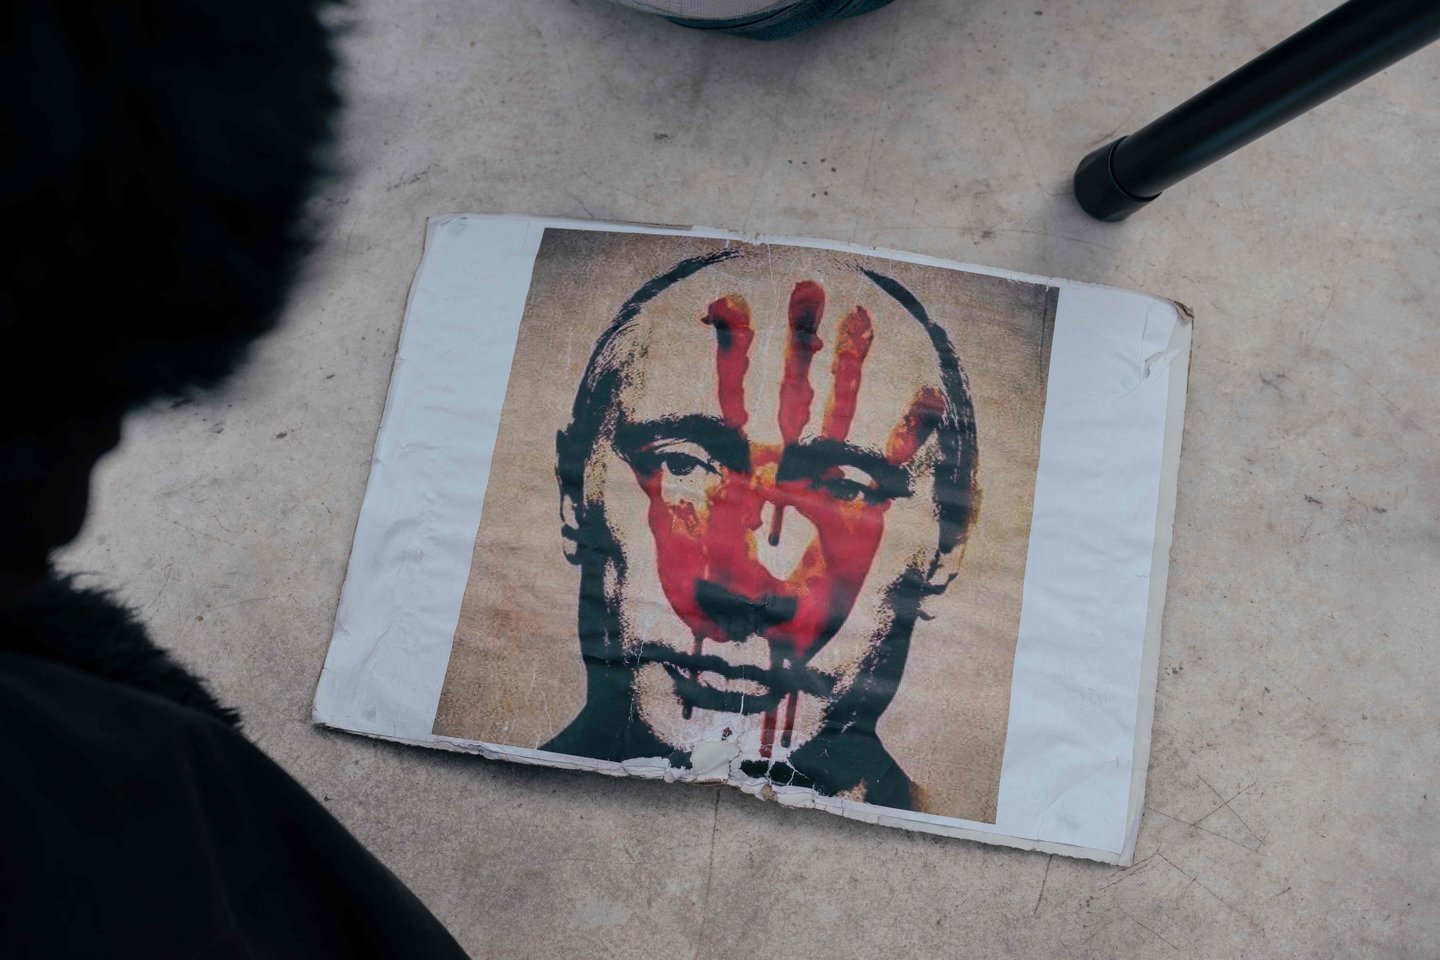 V.Putinas.<br>AFP/Scanpix nuotr.